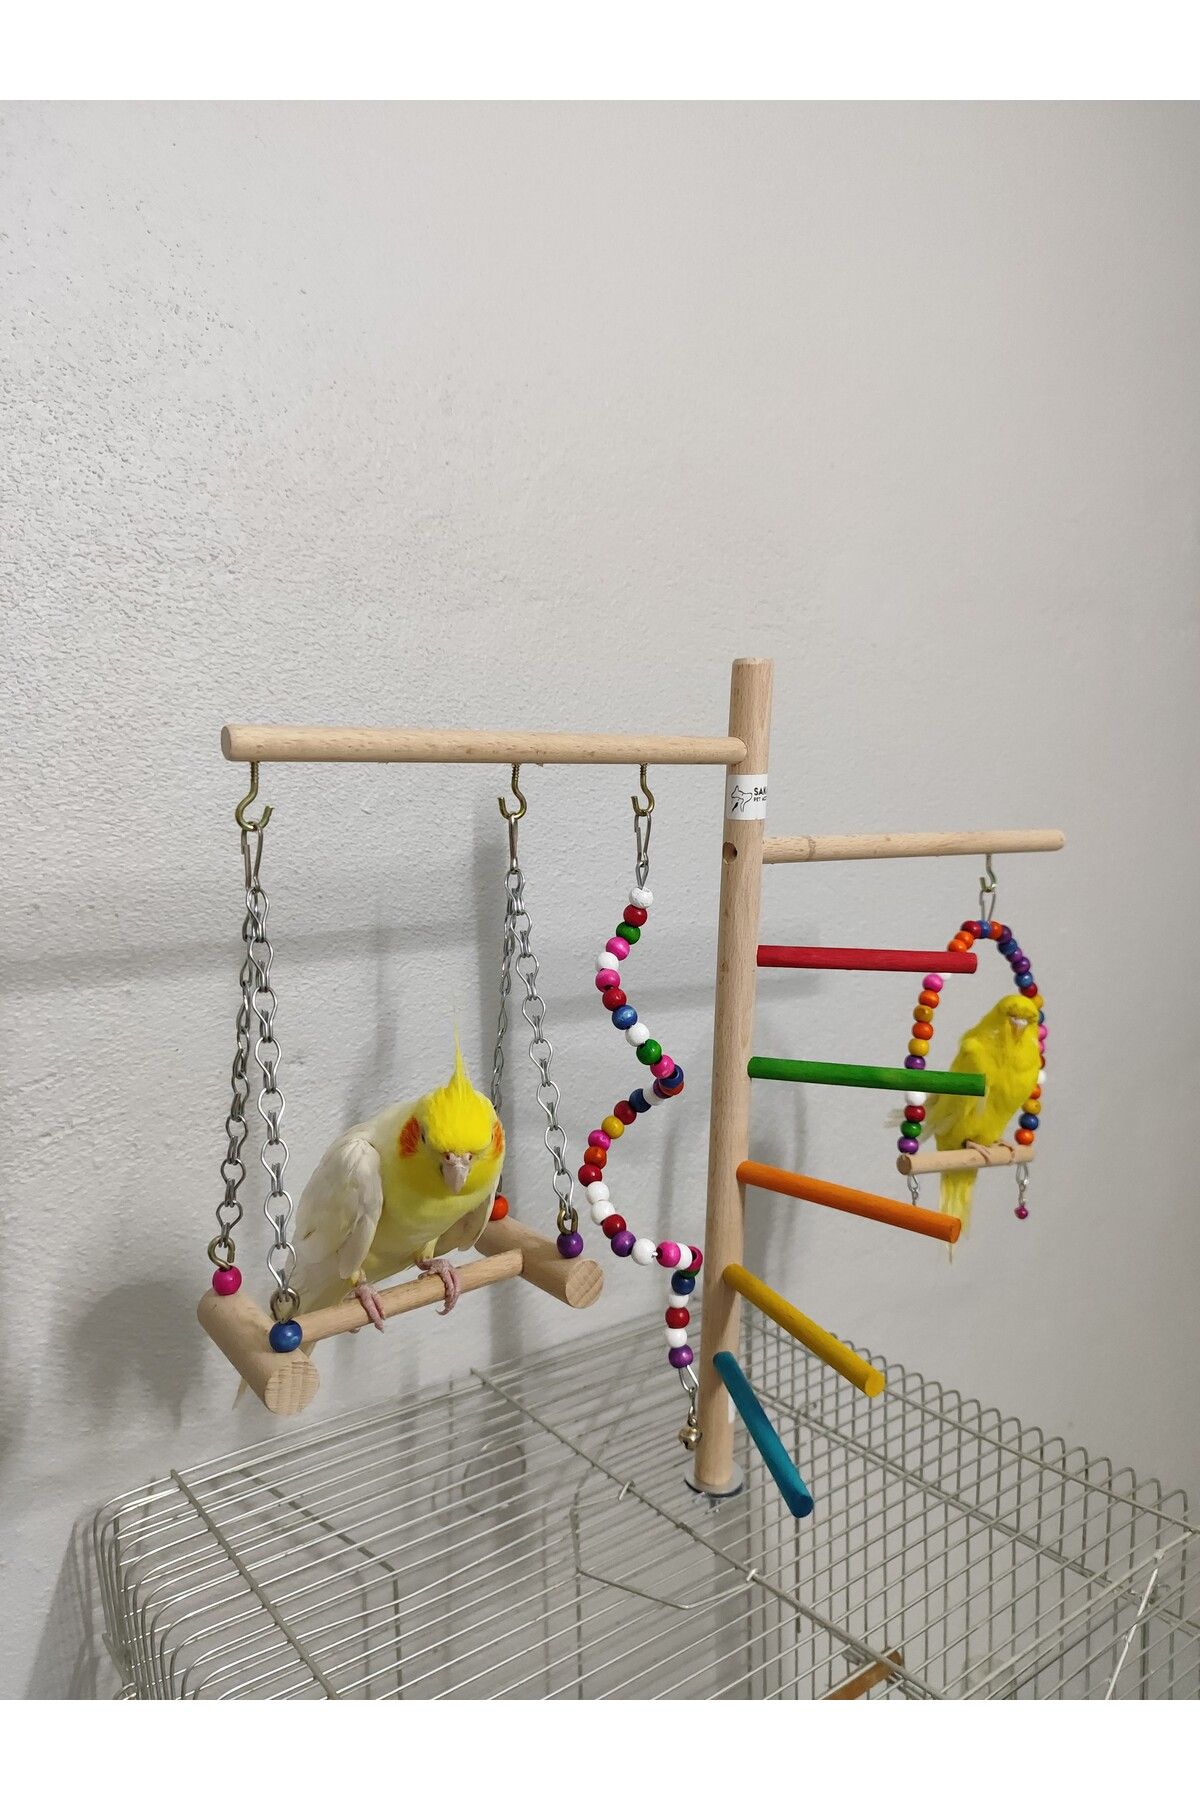 SAKAPET Muhabbet Kuşu Sultan Papağanı Kafes Üstü Tünekli Dev Kuş Eğlence Platformu